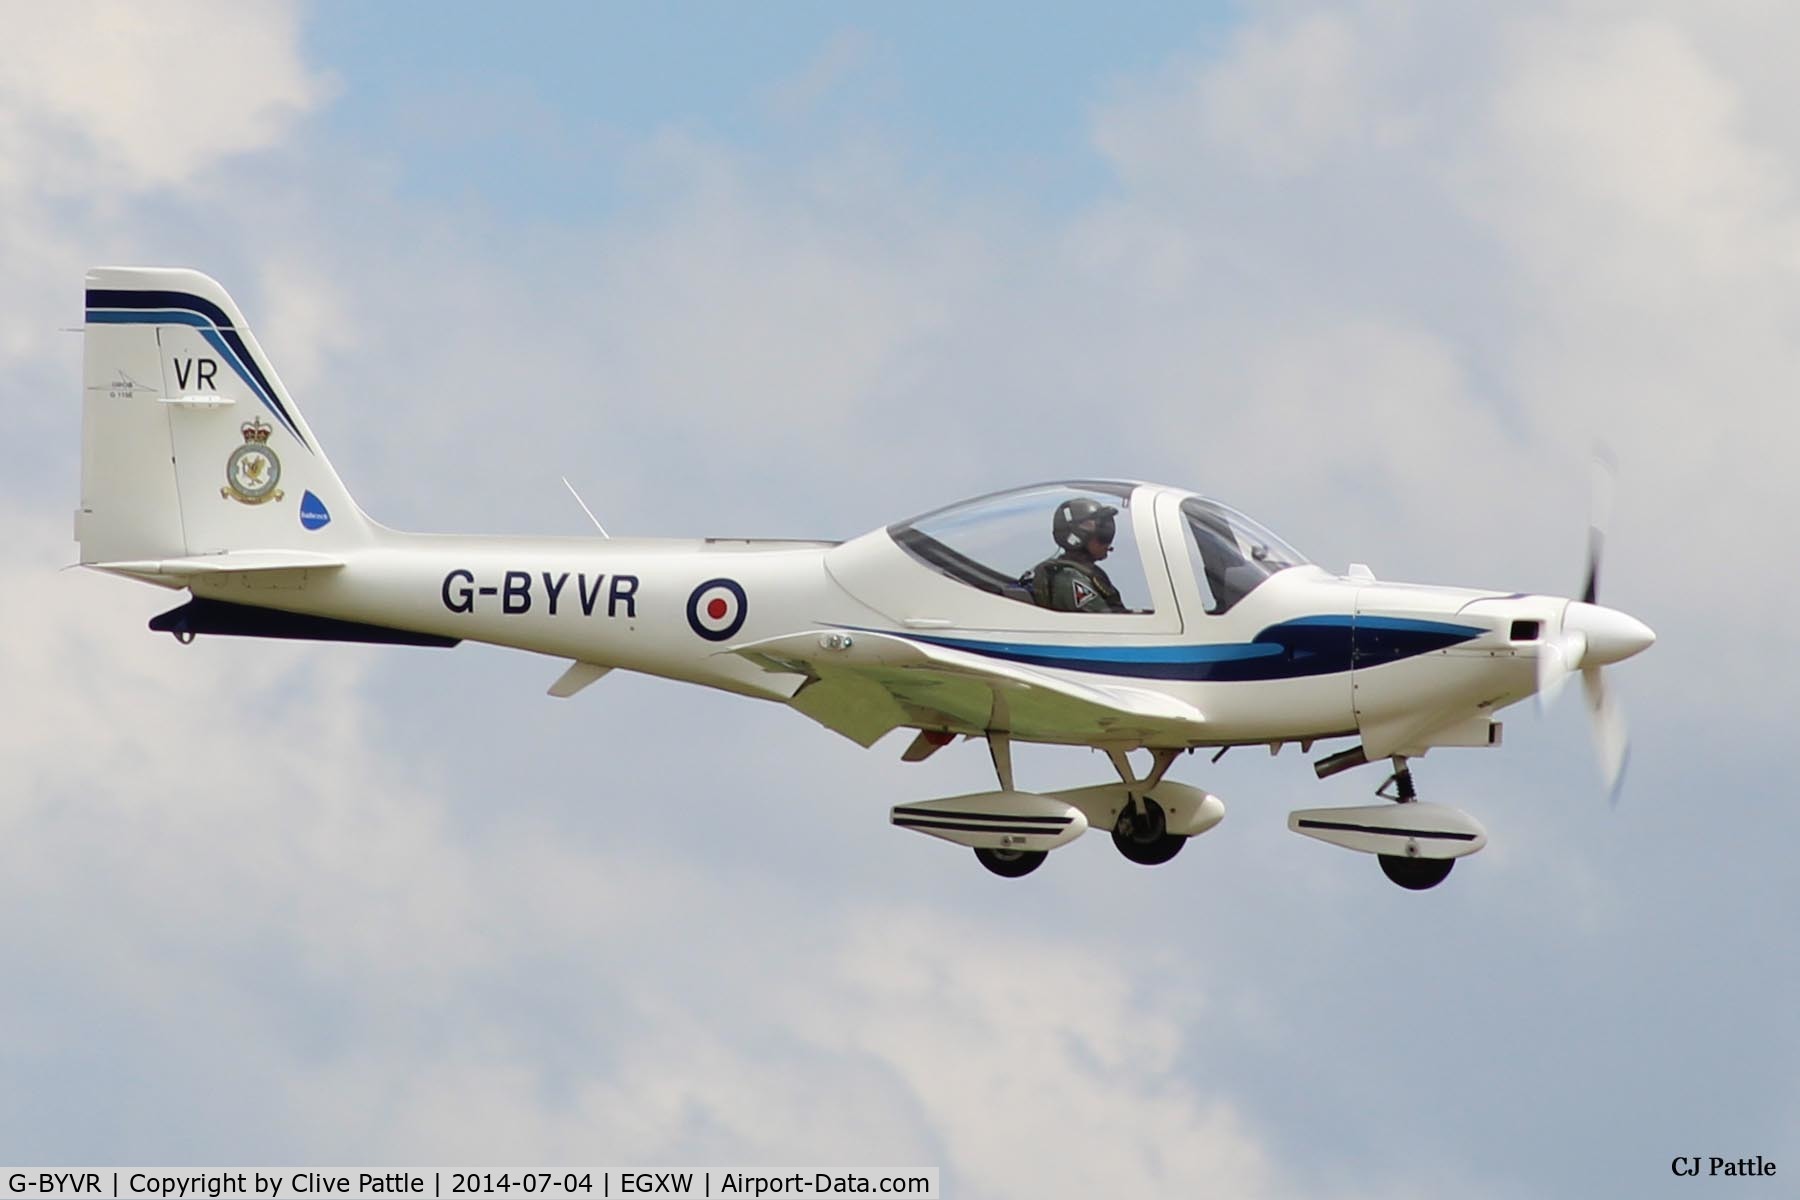 G-BYVR, 2000 Grob G-115E Tutor T1 C/N 82127/E, On approach to Waddington Airshow 2014